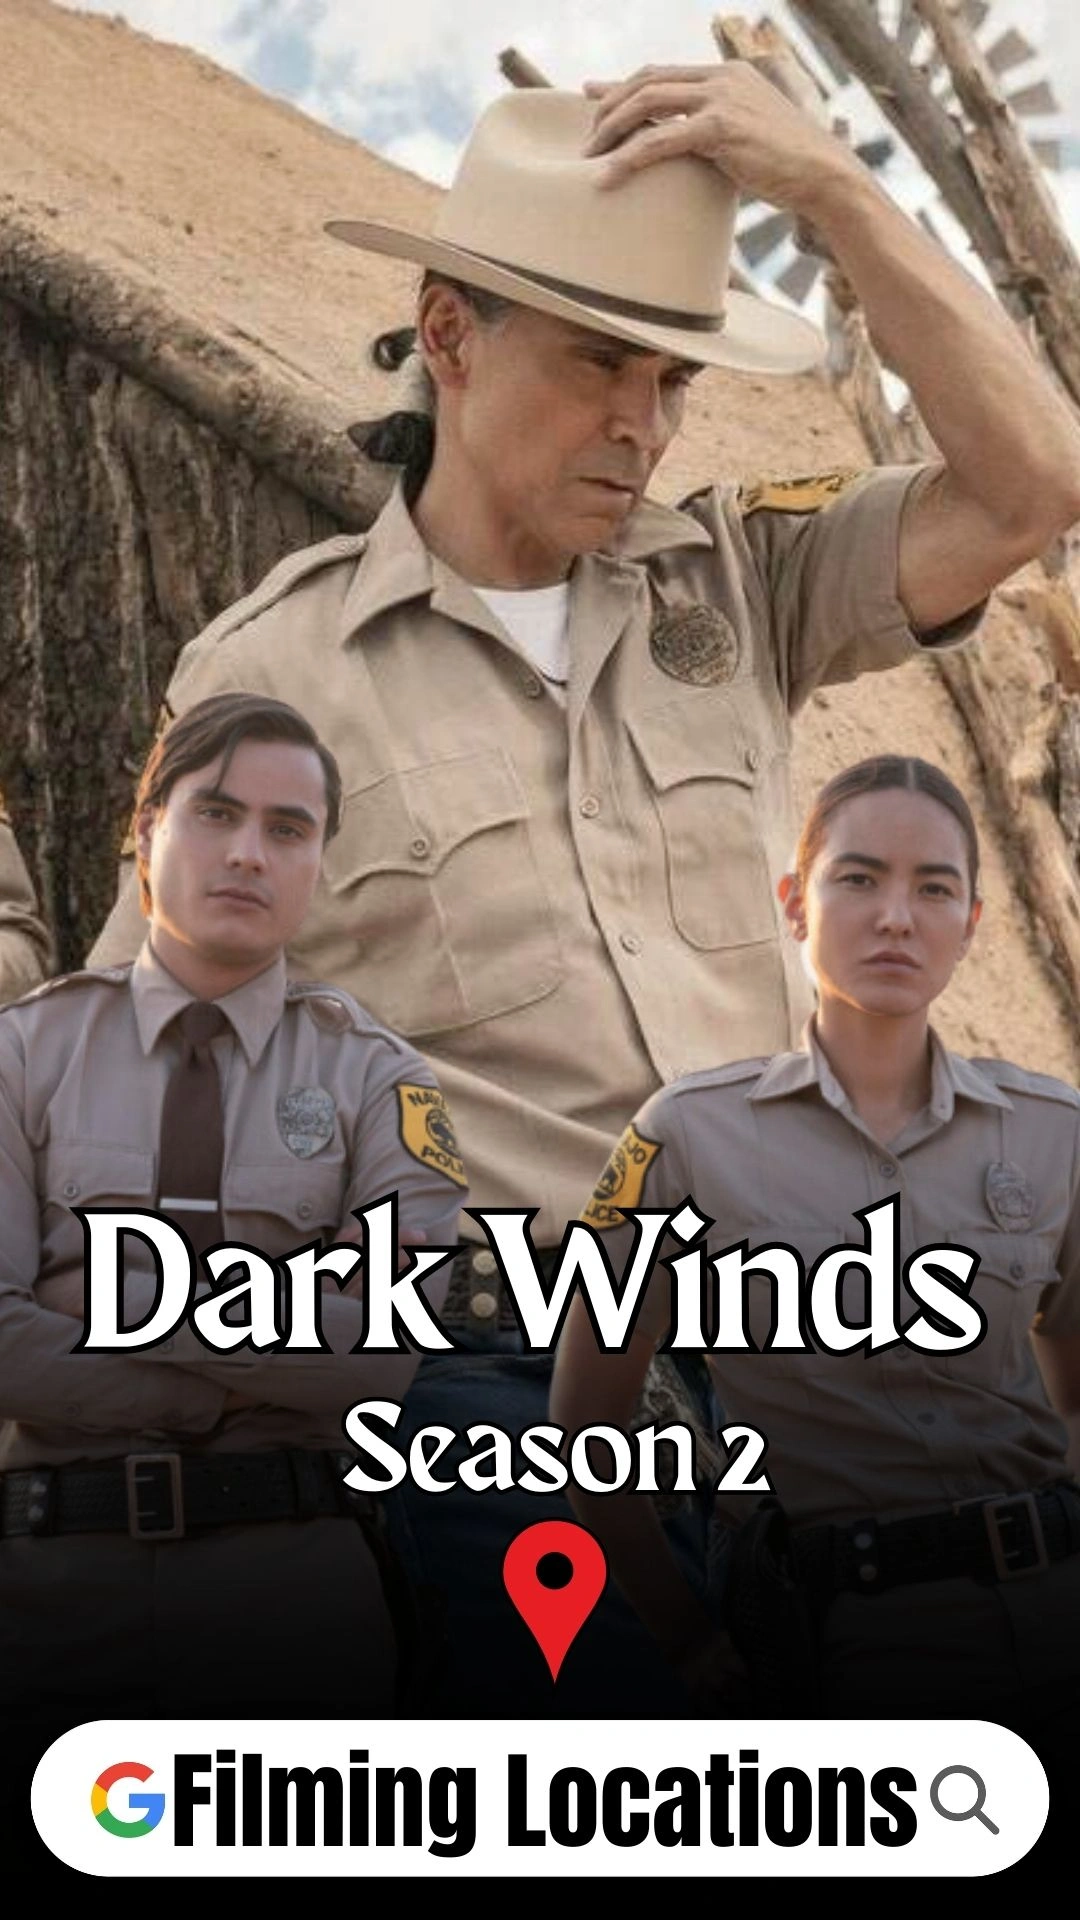 Dark Winds Season 2 Filming Locations